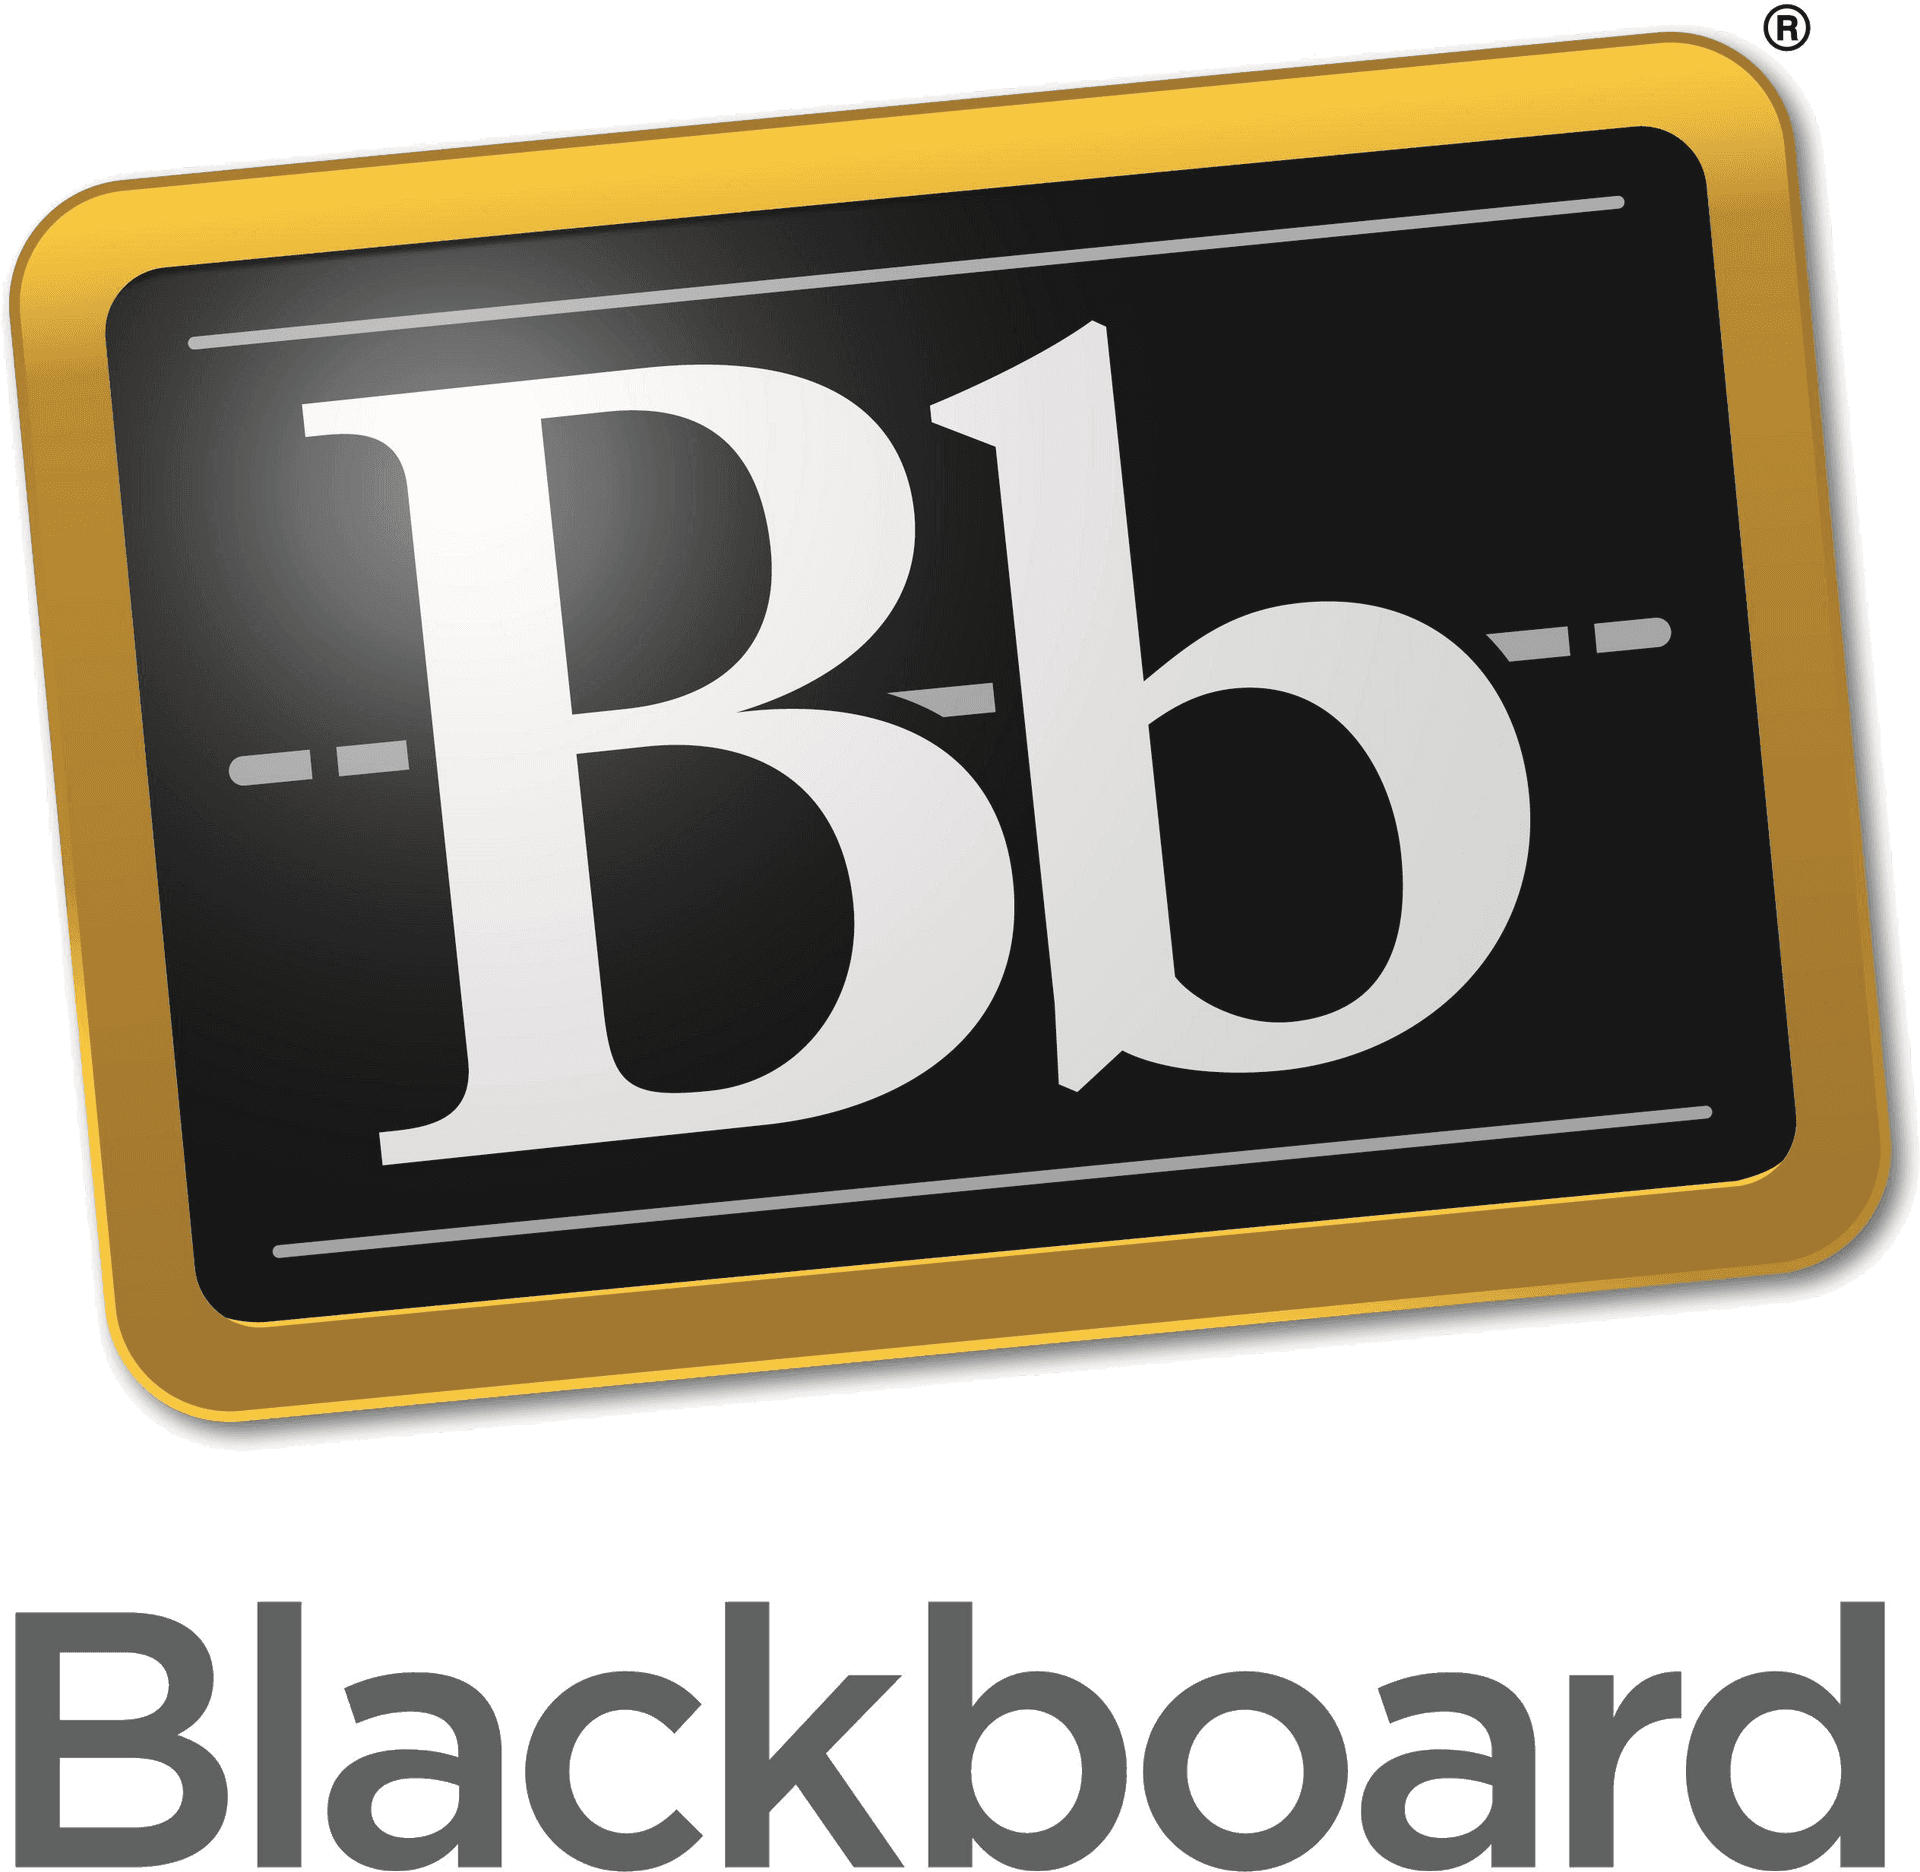 Blackboard Logo Image PNG image